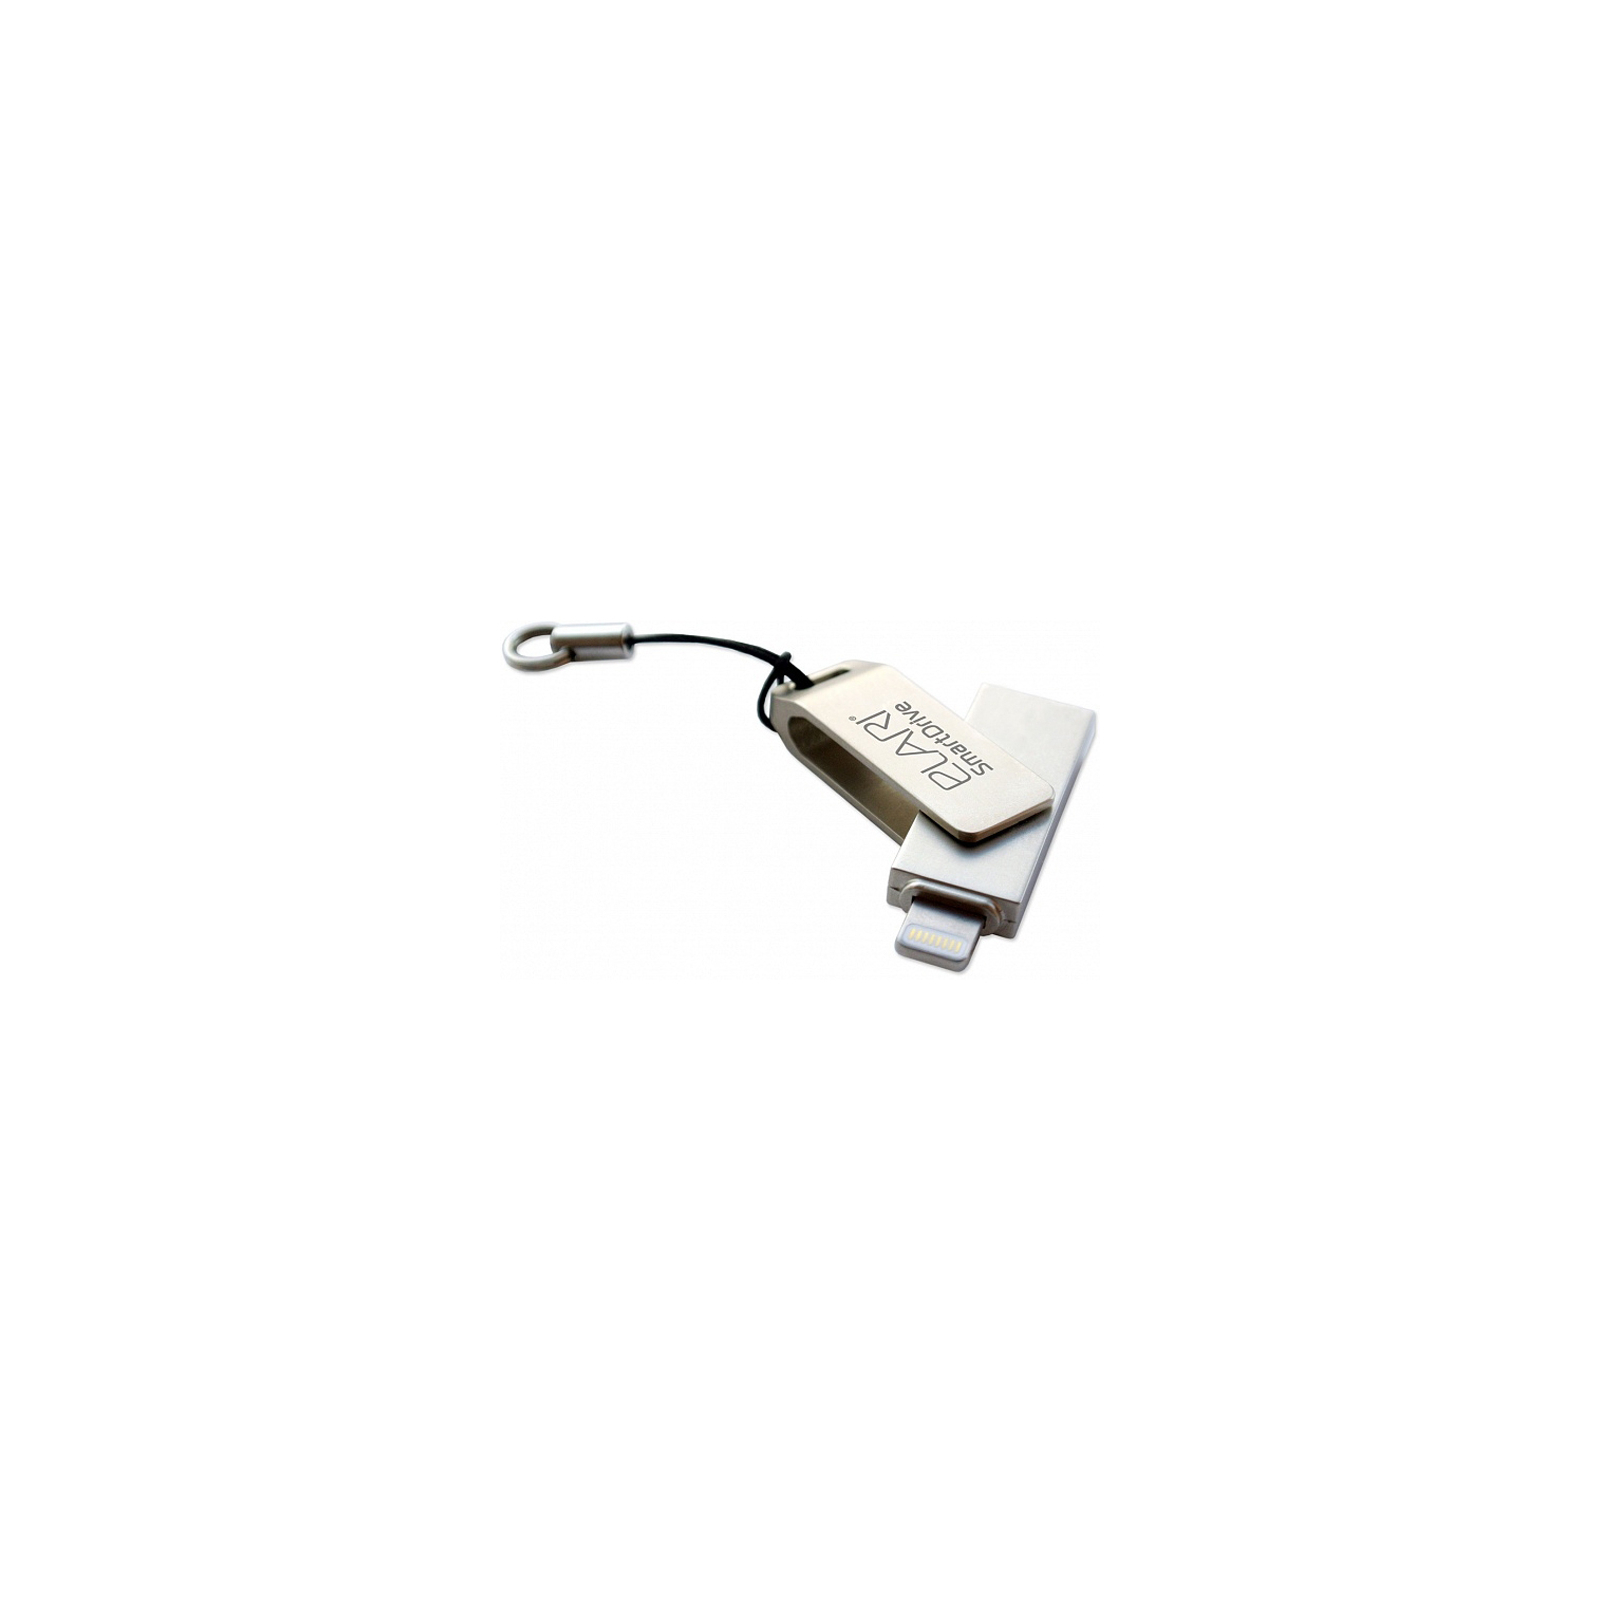 USB флеш накопитель Elari 16GB SmartDrive Silver USB 3.0/Lightning (ELSD16GB) изображение 2